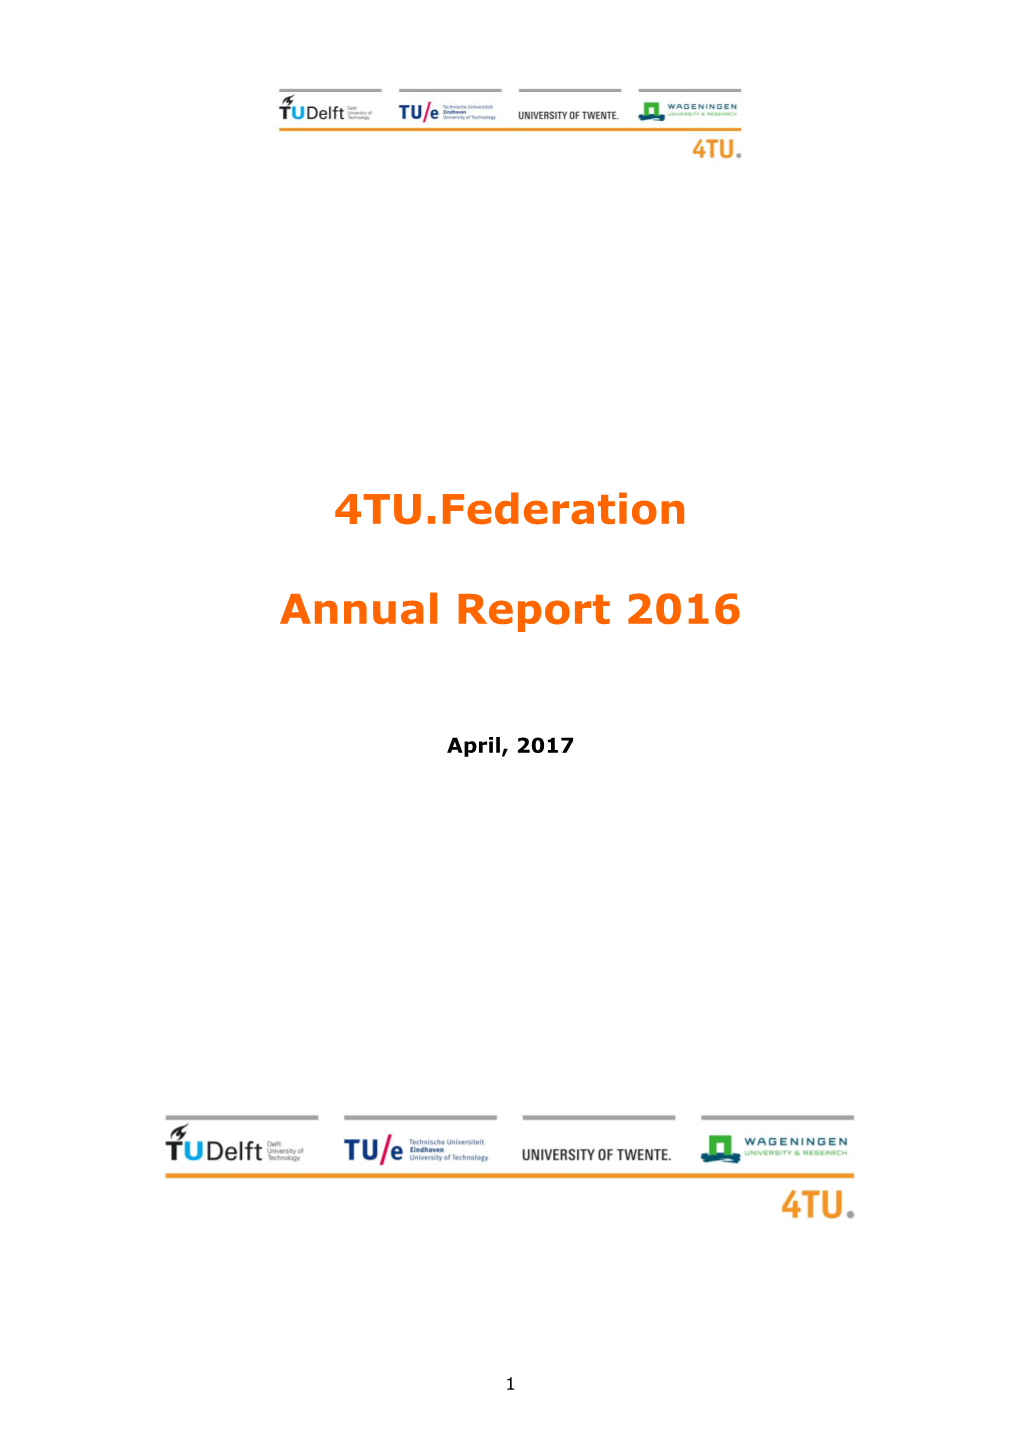 4TU.Federation Annual Report 2016